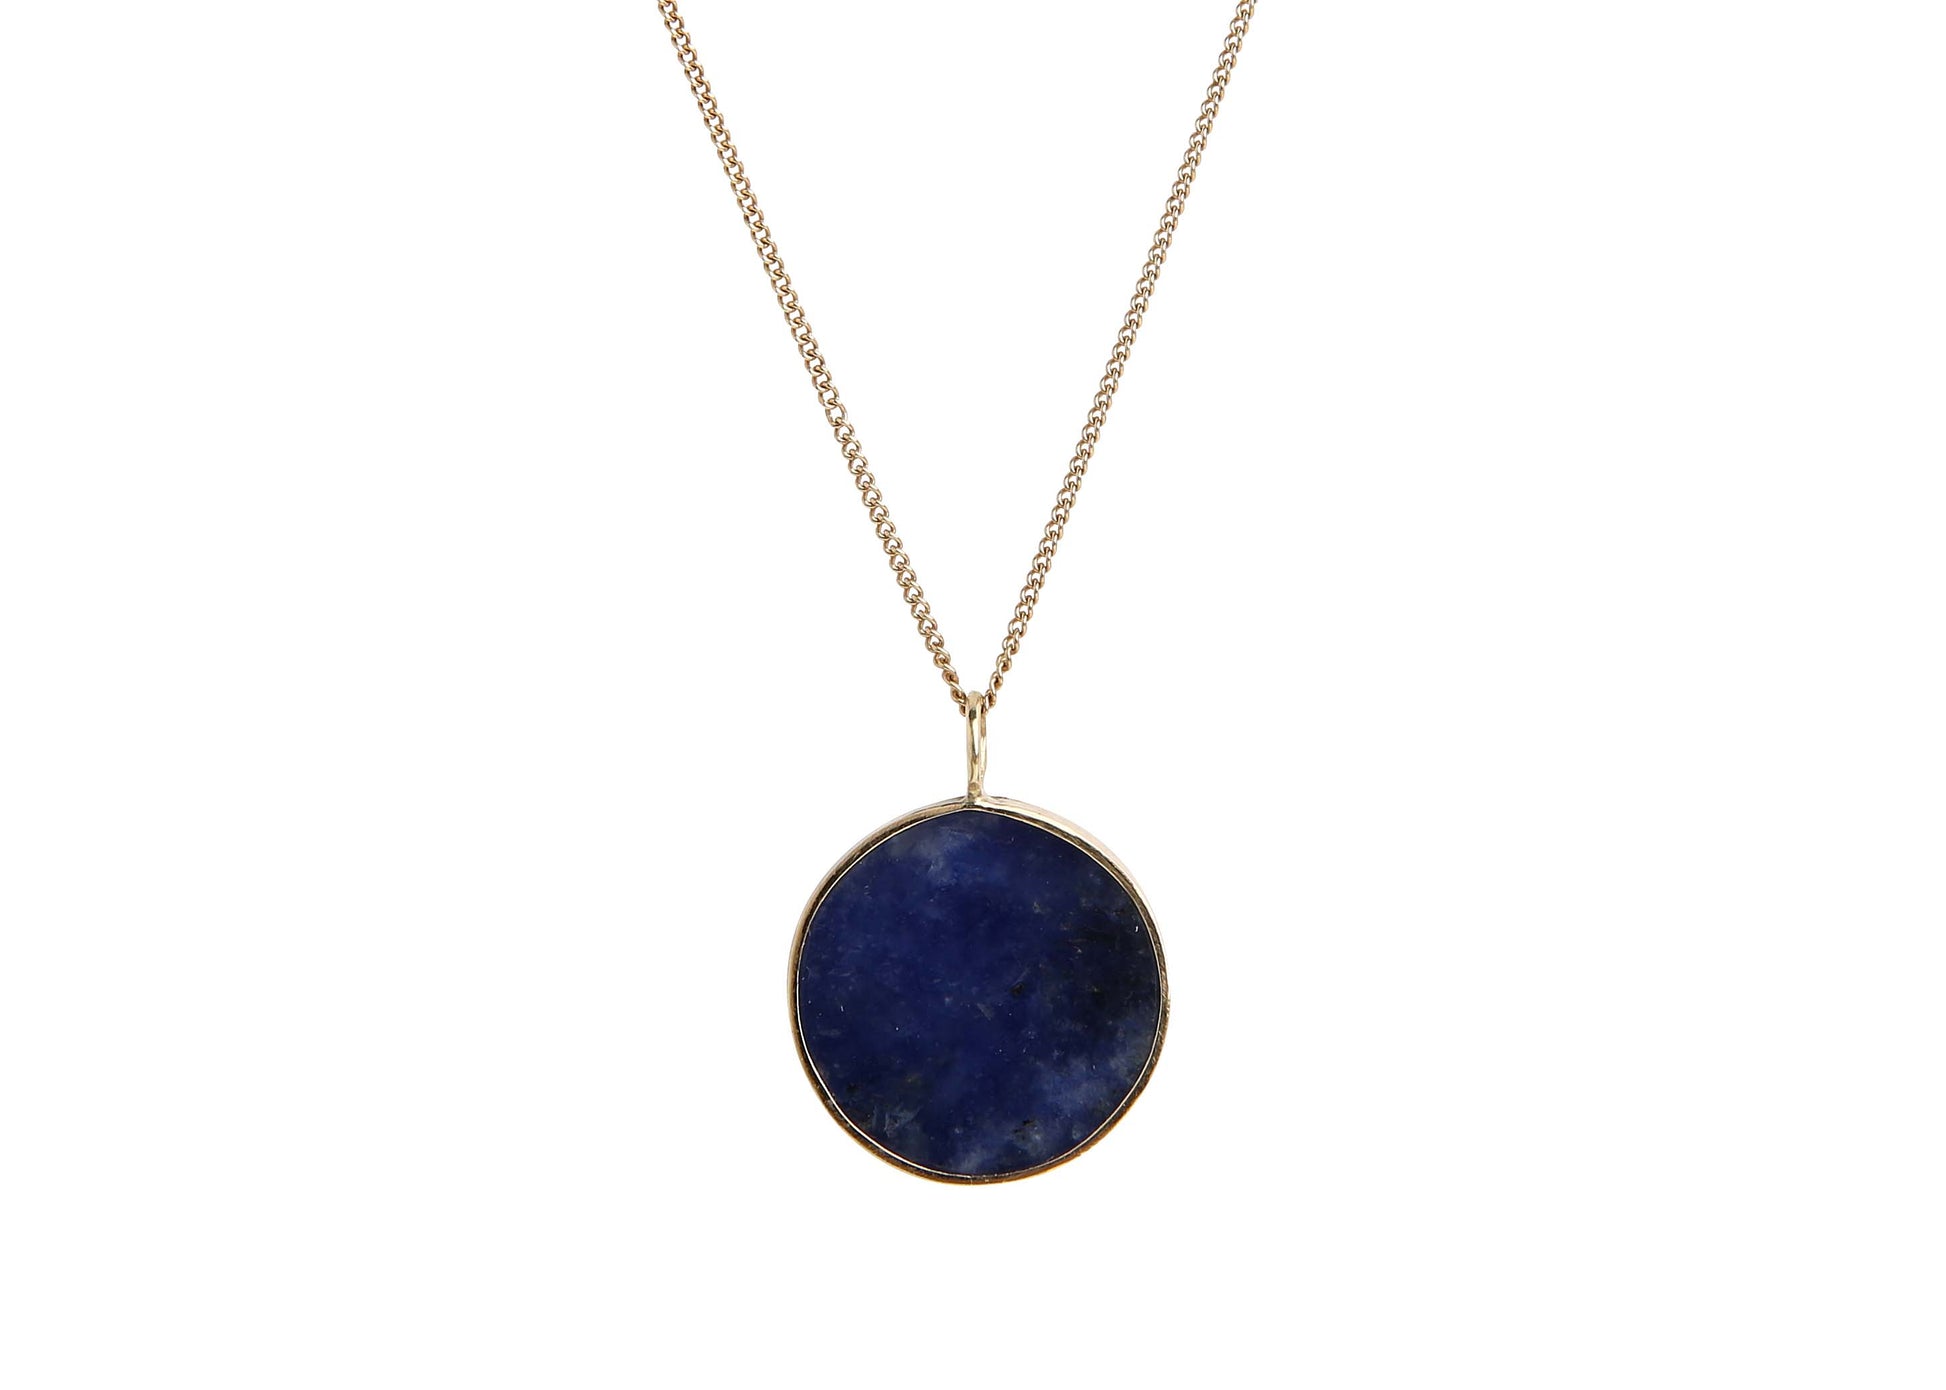 Blue lapis lazuli and gold pendant necklace